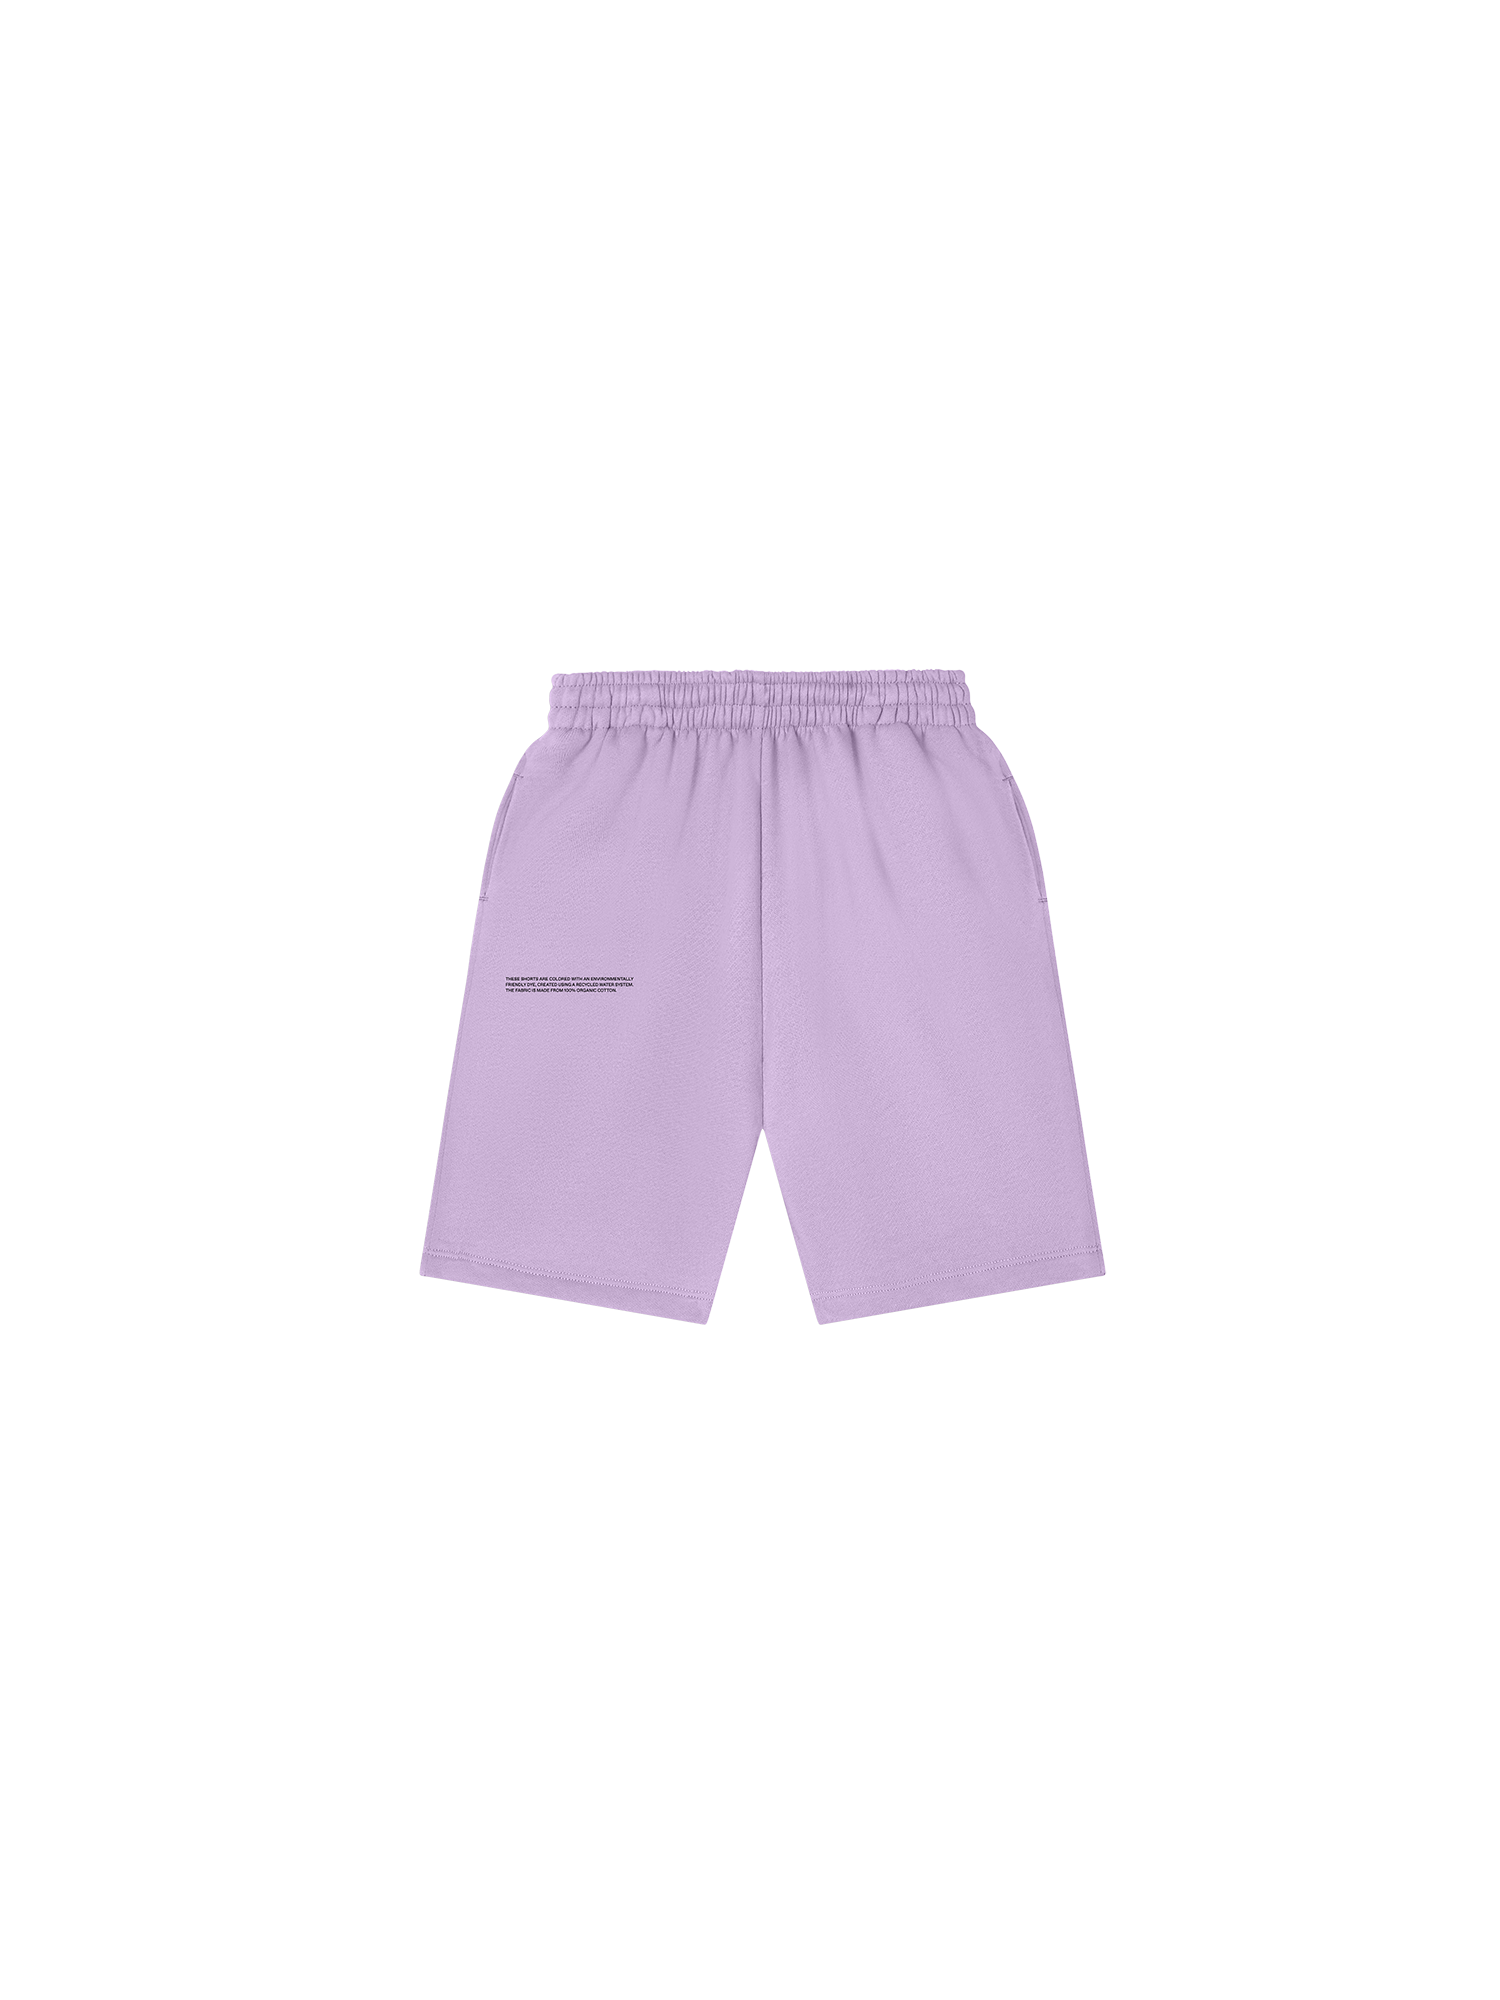 Kids 365 Long Shorts SS22—orchid purple packshot-3